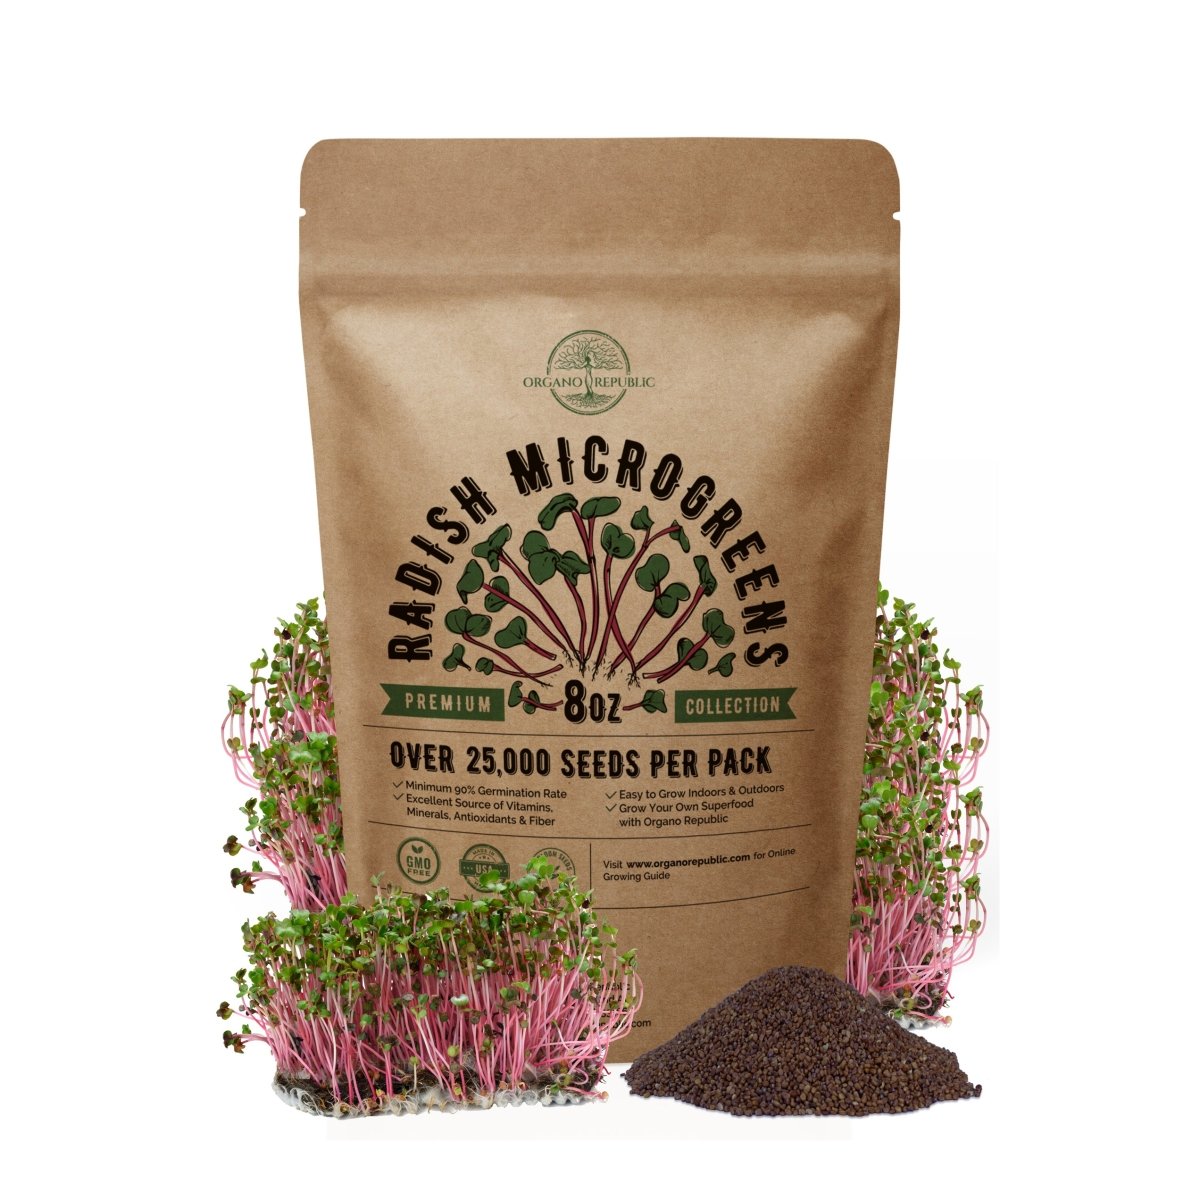 Radish Sprouting & Microgreens Seeds 8oz - Over 25 000 Non-GMO, Heirloom Seeds - Organo Republic